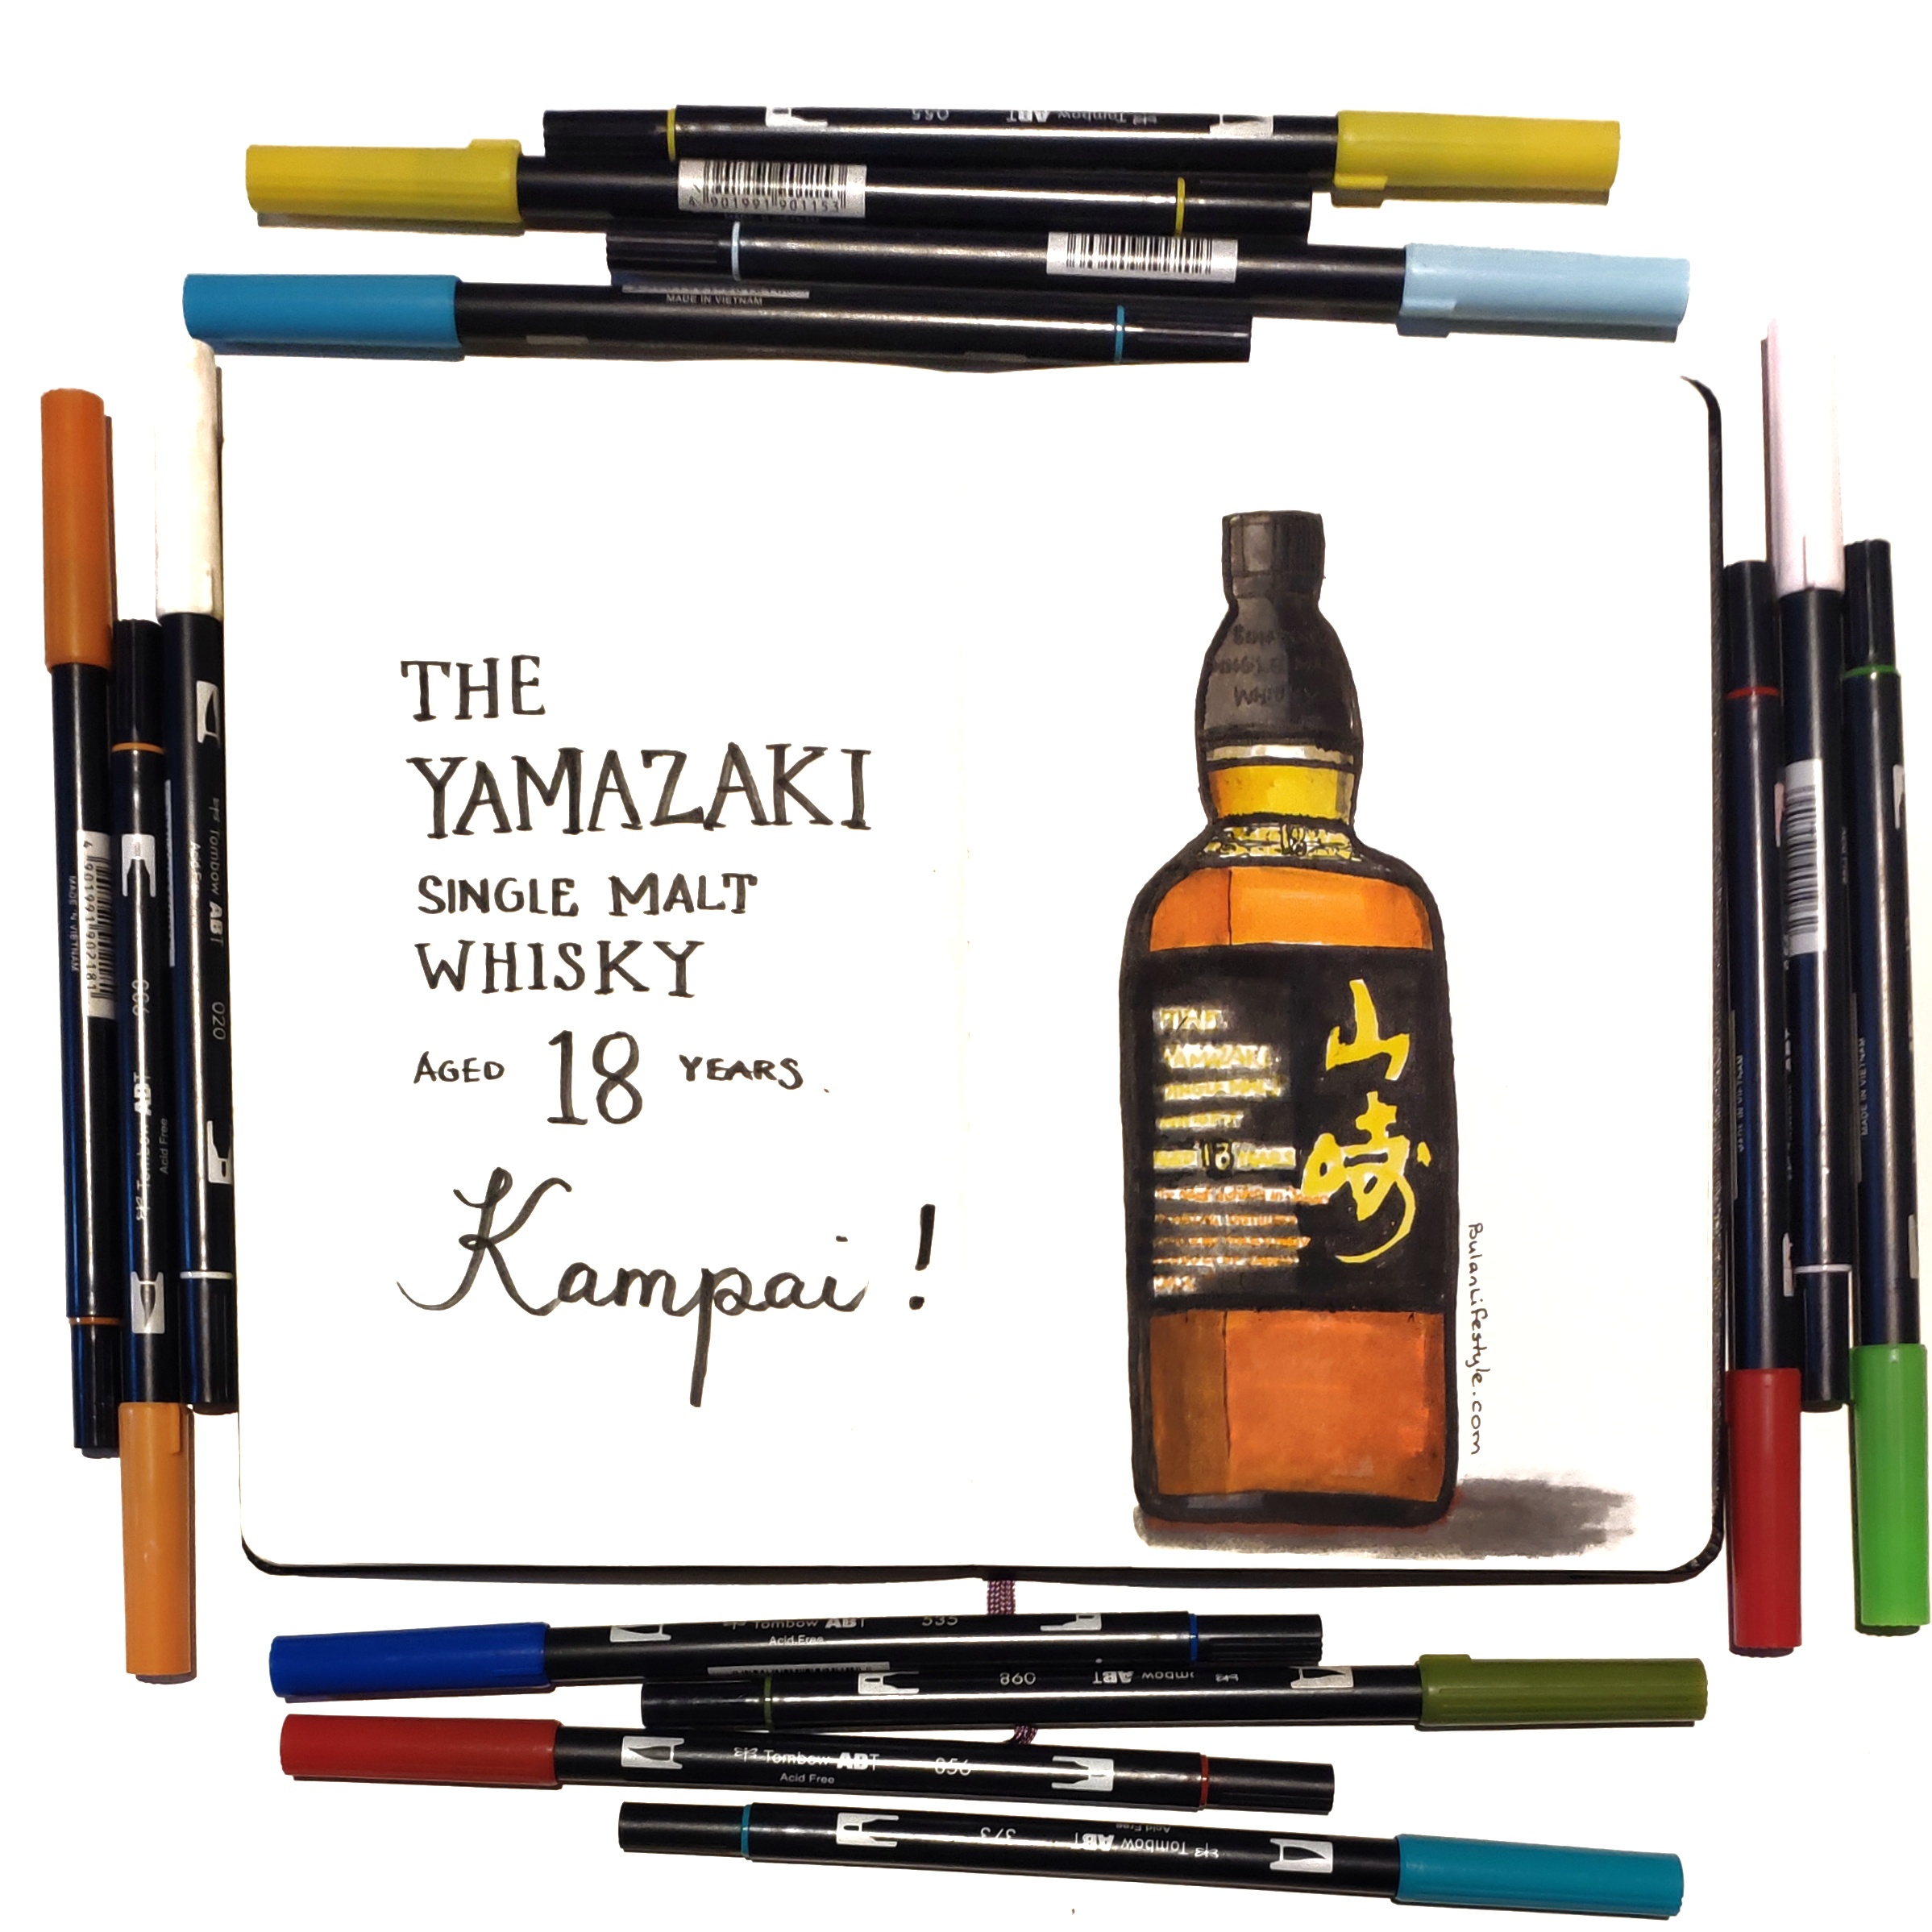 Yamazaki single malt whisky